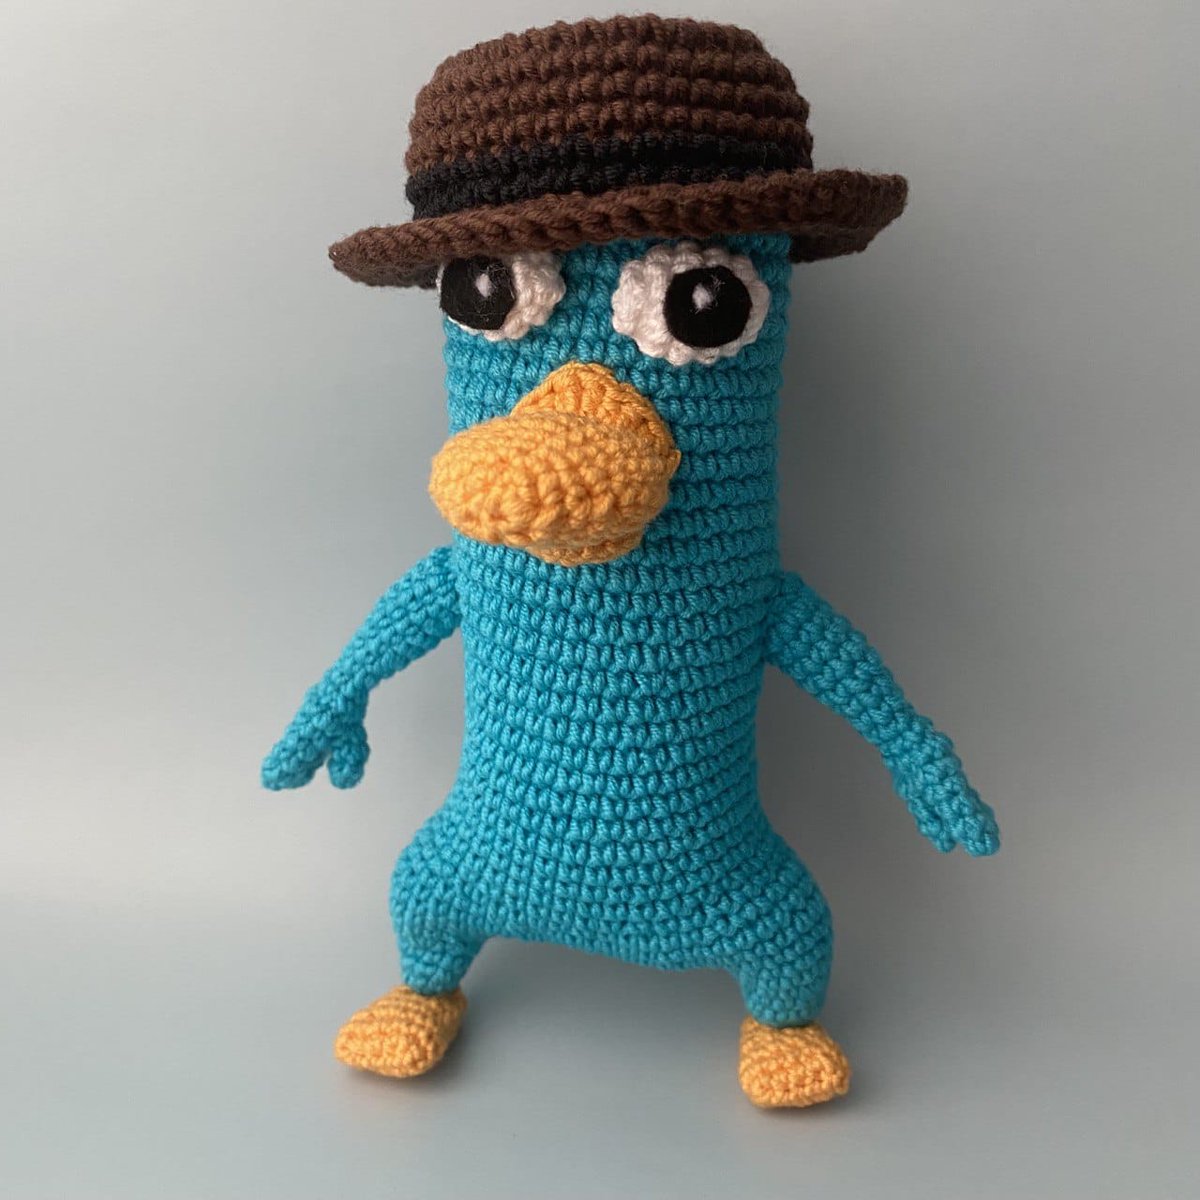 Perry the Platypus (Agent P) crochet pattern dailydoll.shop/shop/perry-the… #handmade #dailydollshop #crochettoy #crochetdoll #crochet #toys #doll #diygift #christmas #amigurumi #diy #amigurumitoy #knitting #birthdaygift #knittingtoys #knittingdolls #plushtoys #giftideas #homedecor